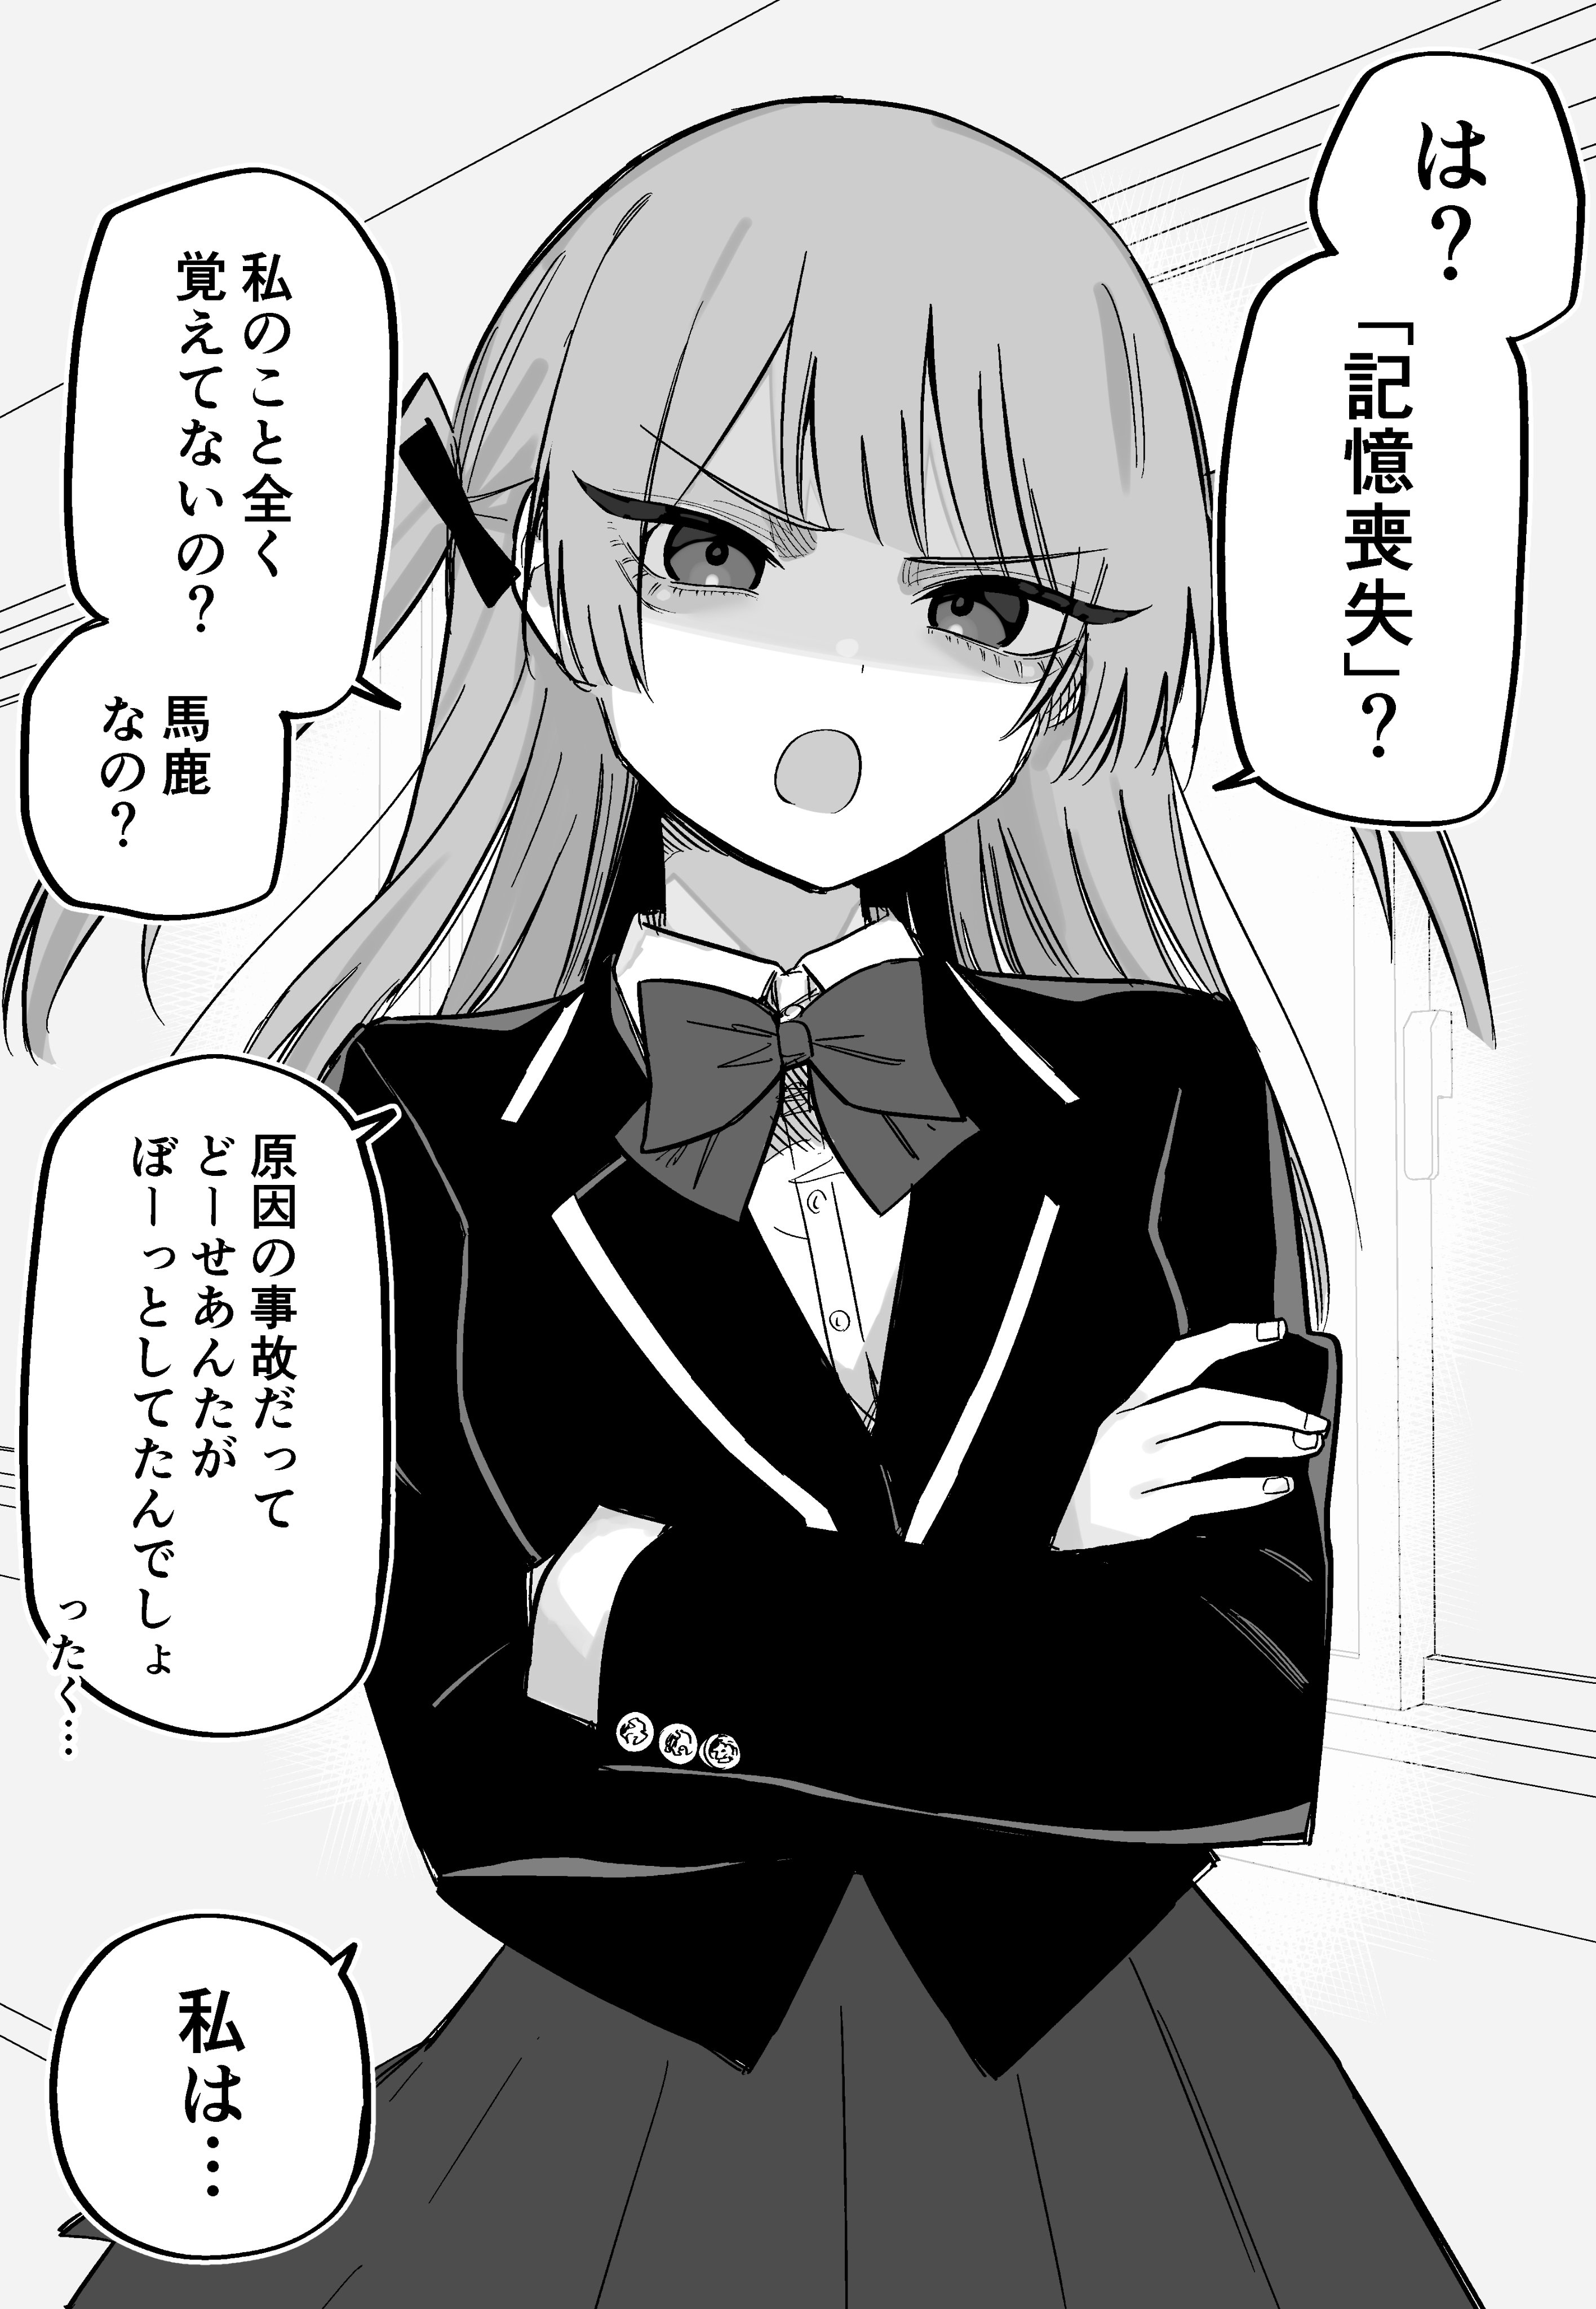 japanese language - What is the disease called Tsurarekia (ツラレキア)? -  Anime & Manga Stack Exchange